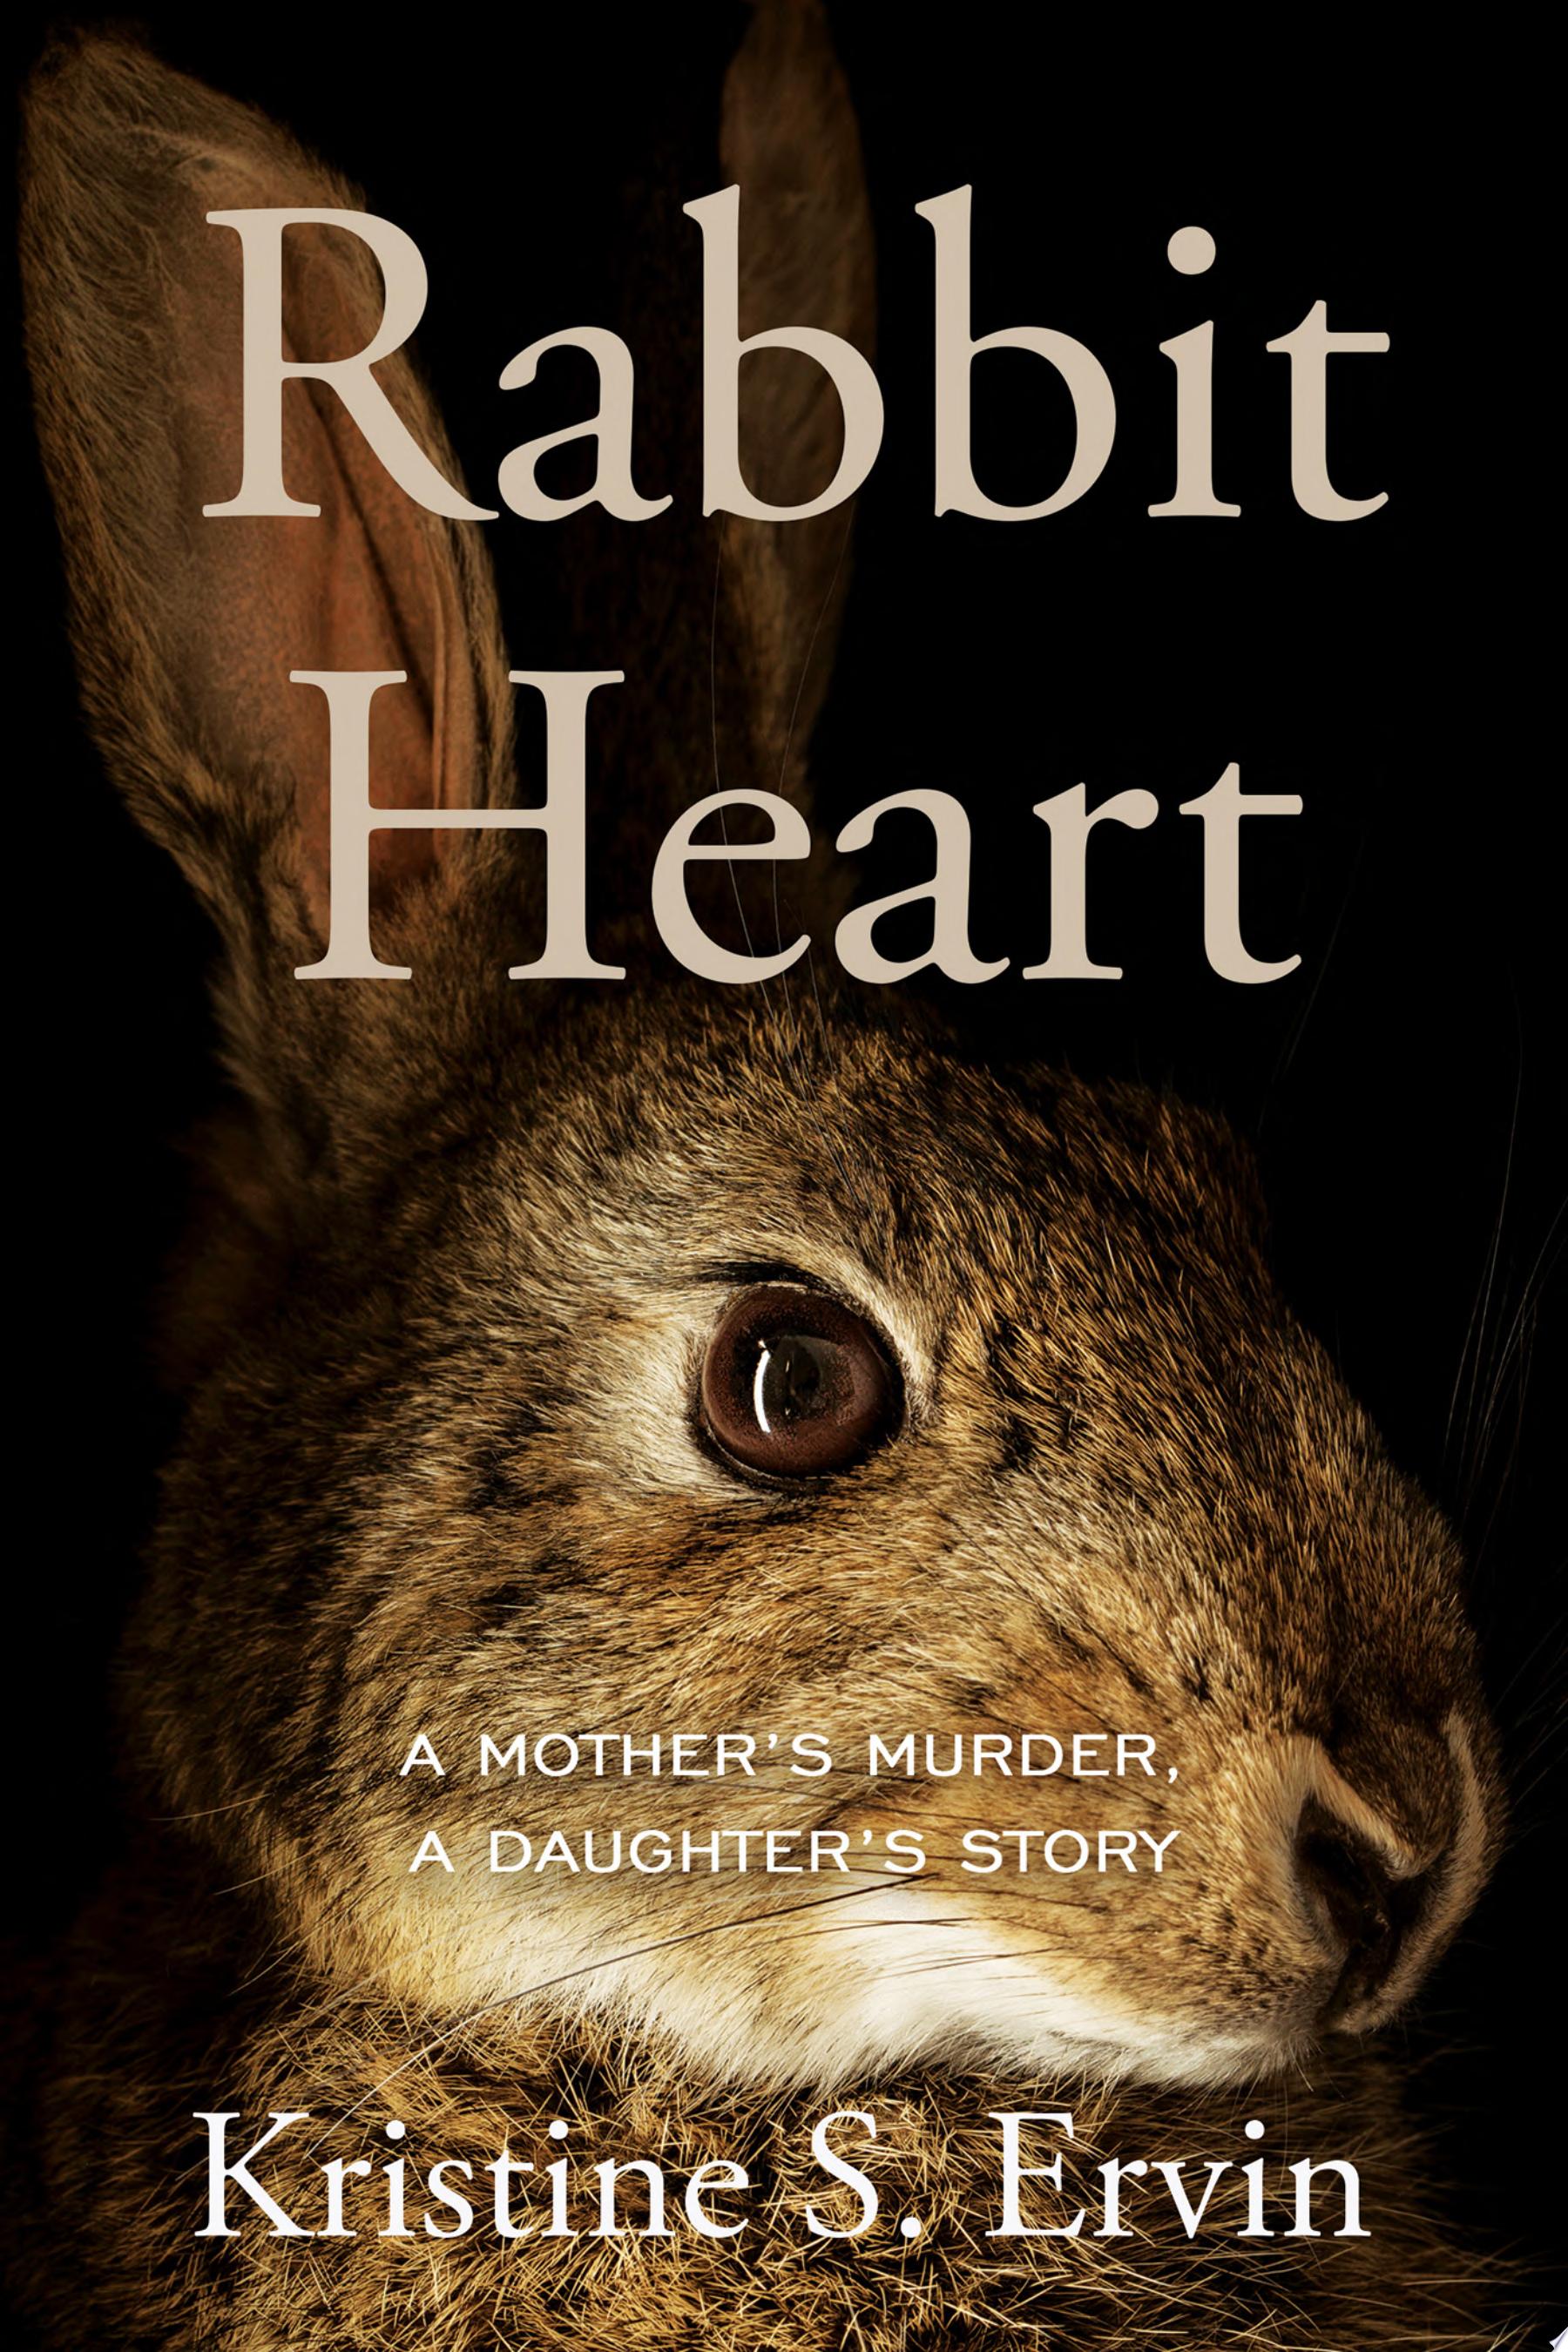 Image for "Rabbit Heart"